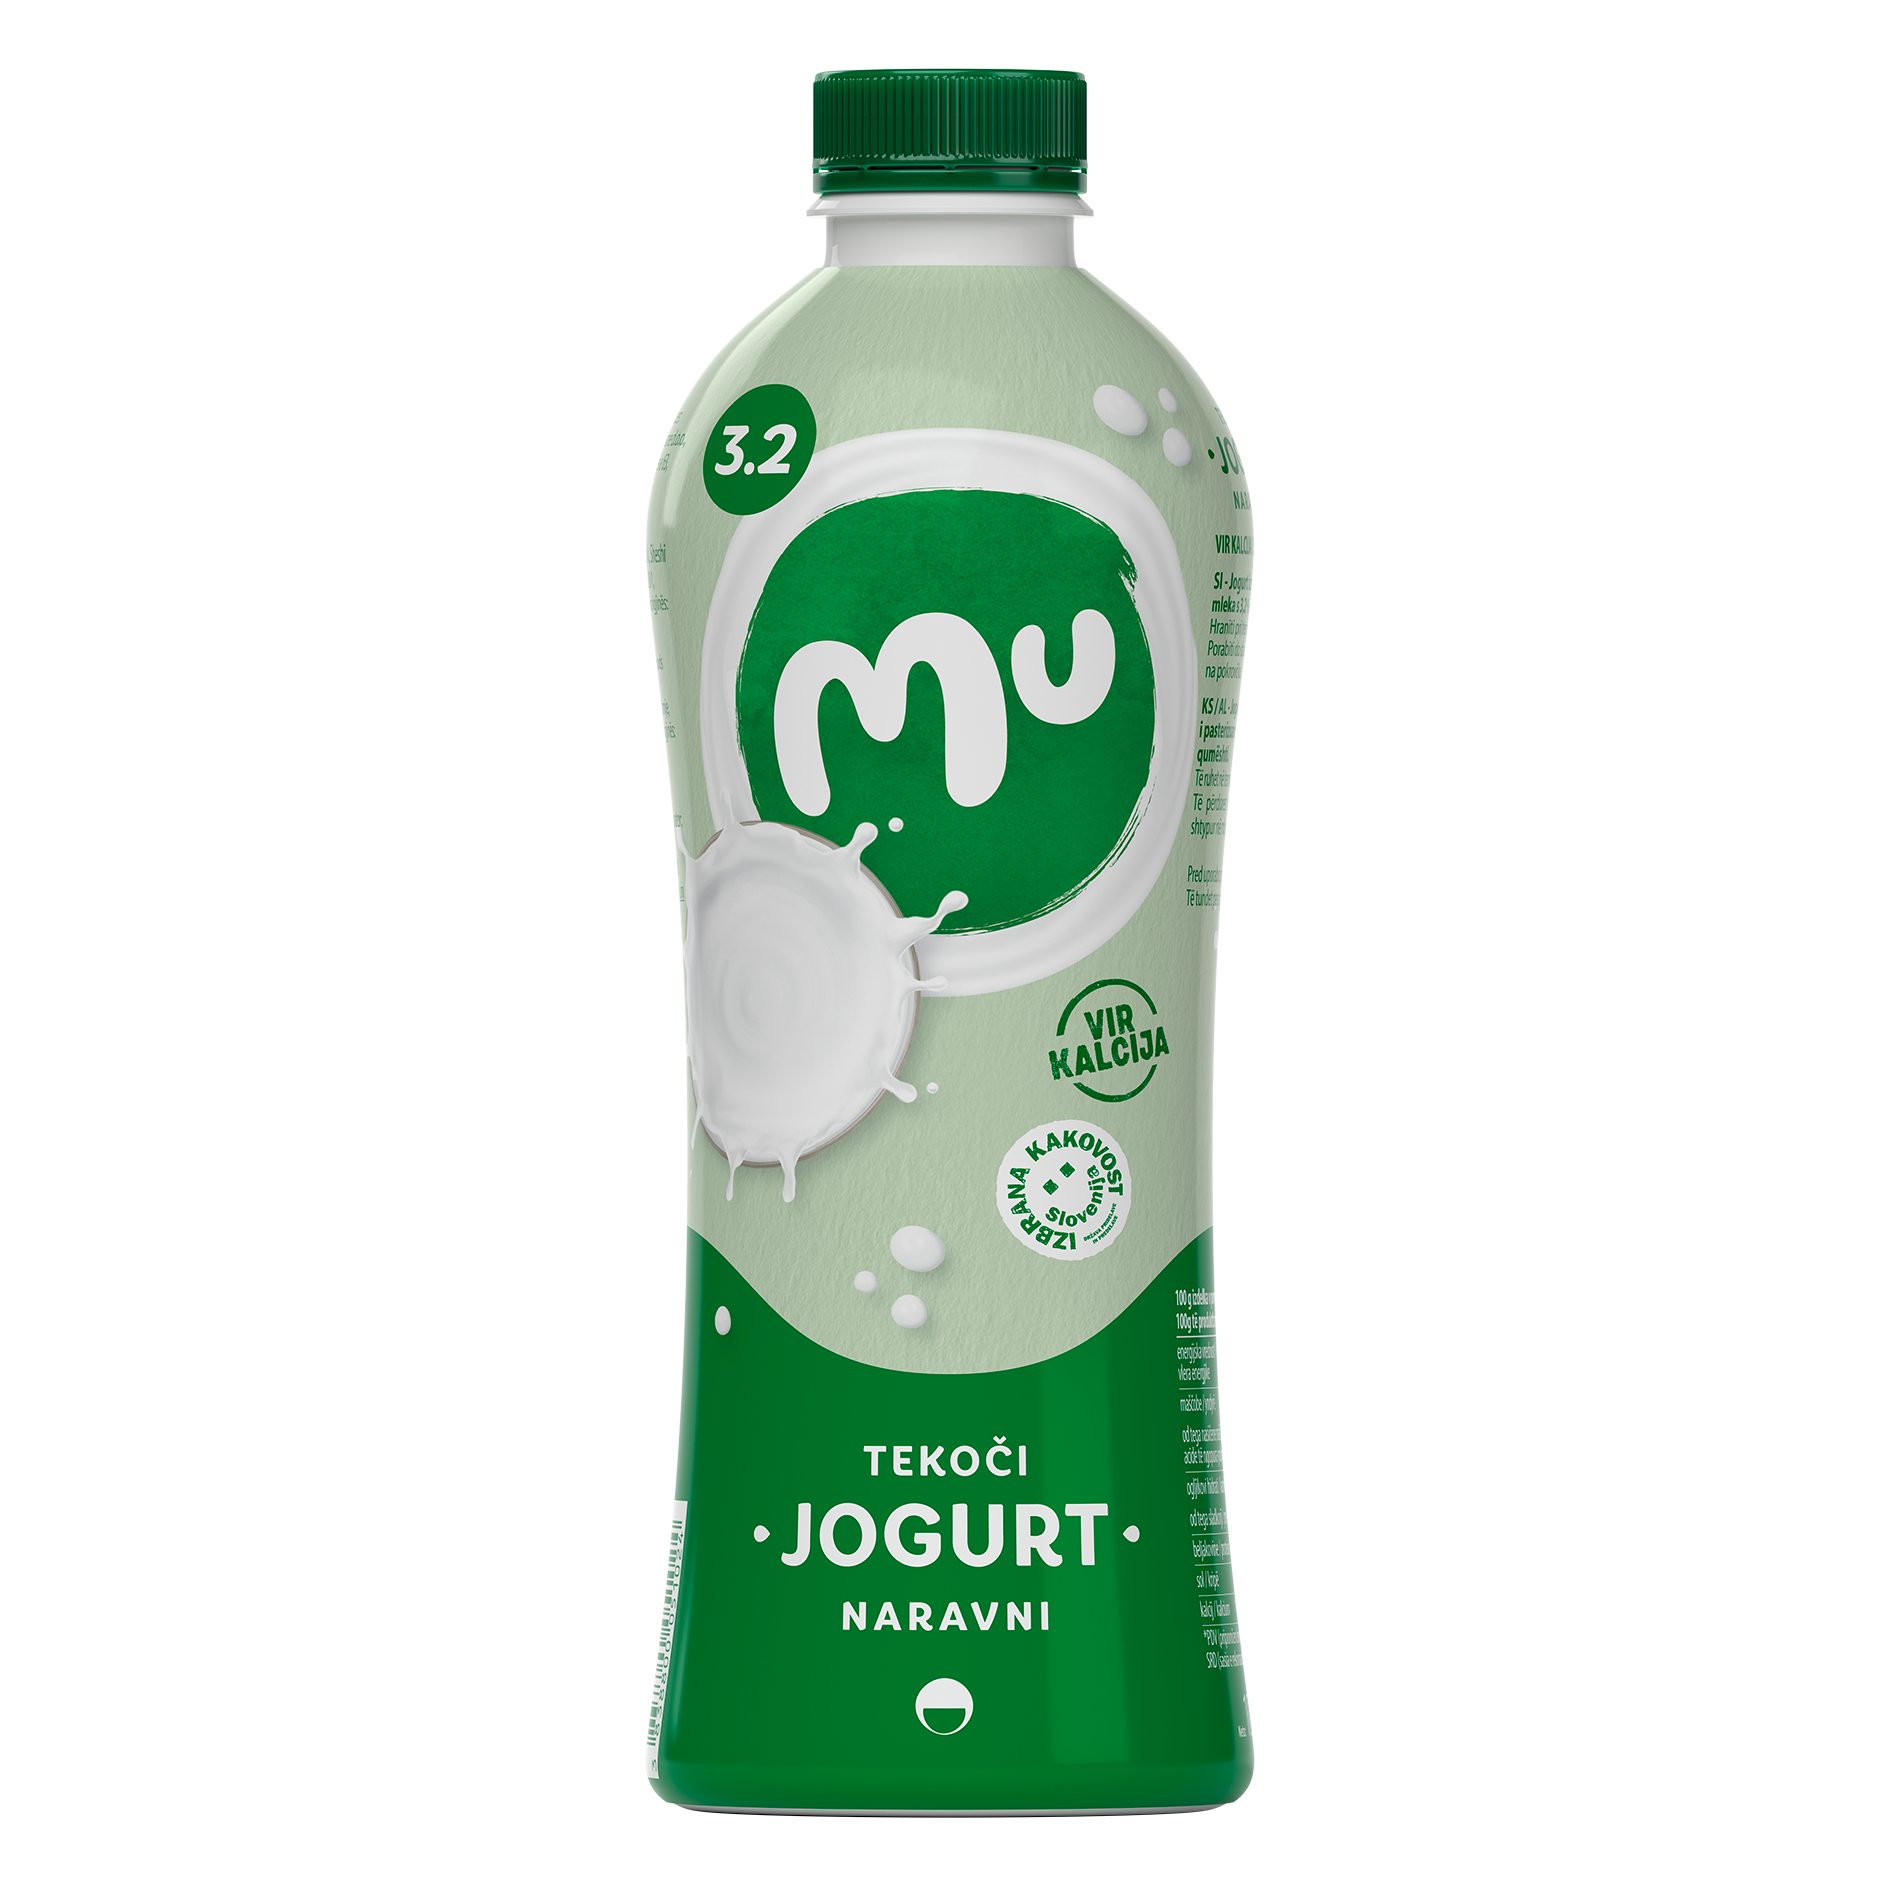 Mu natural drinking yoghurt with 3,2 % milk fat; plastic bottle